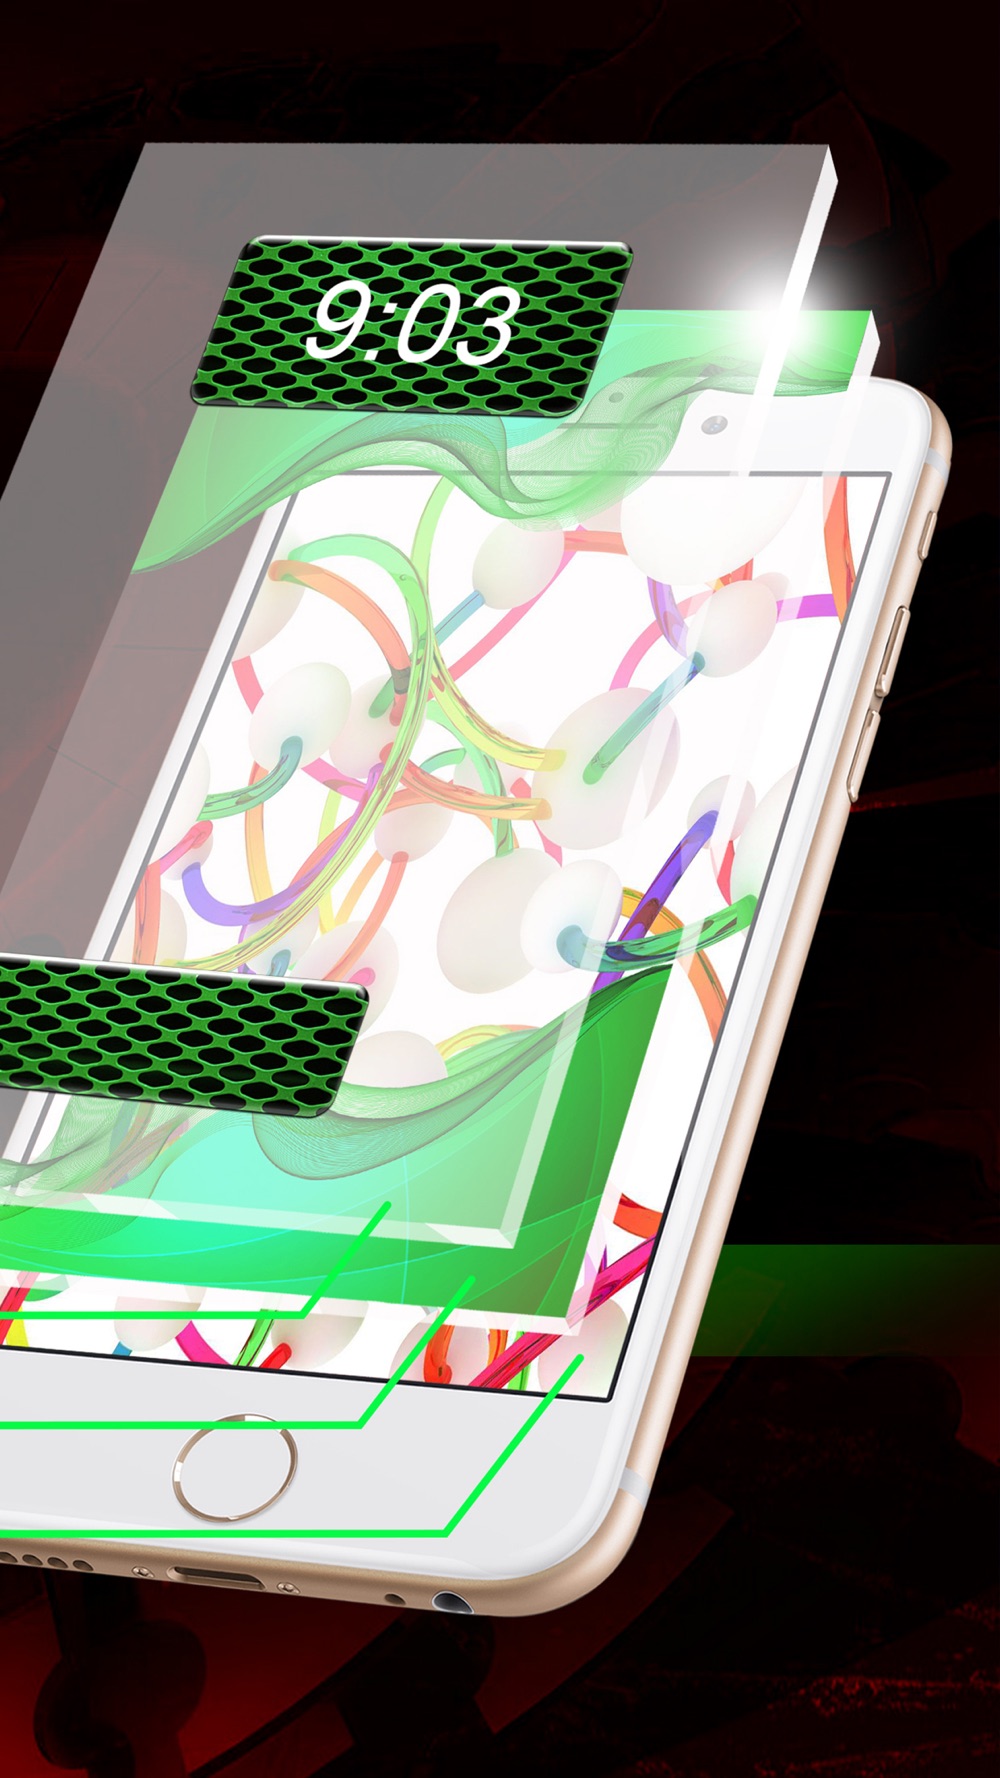 3d 壁紙 のための Iphone 美しい ロック 画面 テーマ そして 素晴らしい 背景 フリー Free Download App For Iphone Steprimo Com